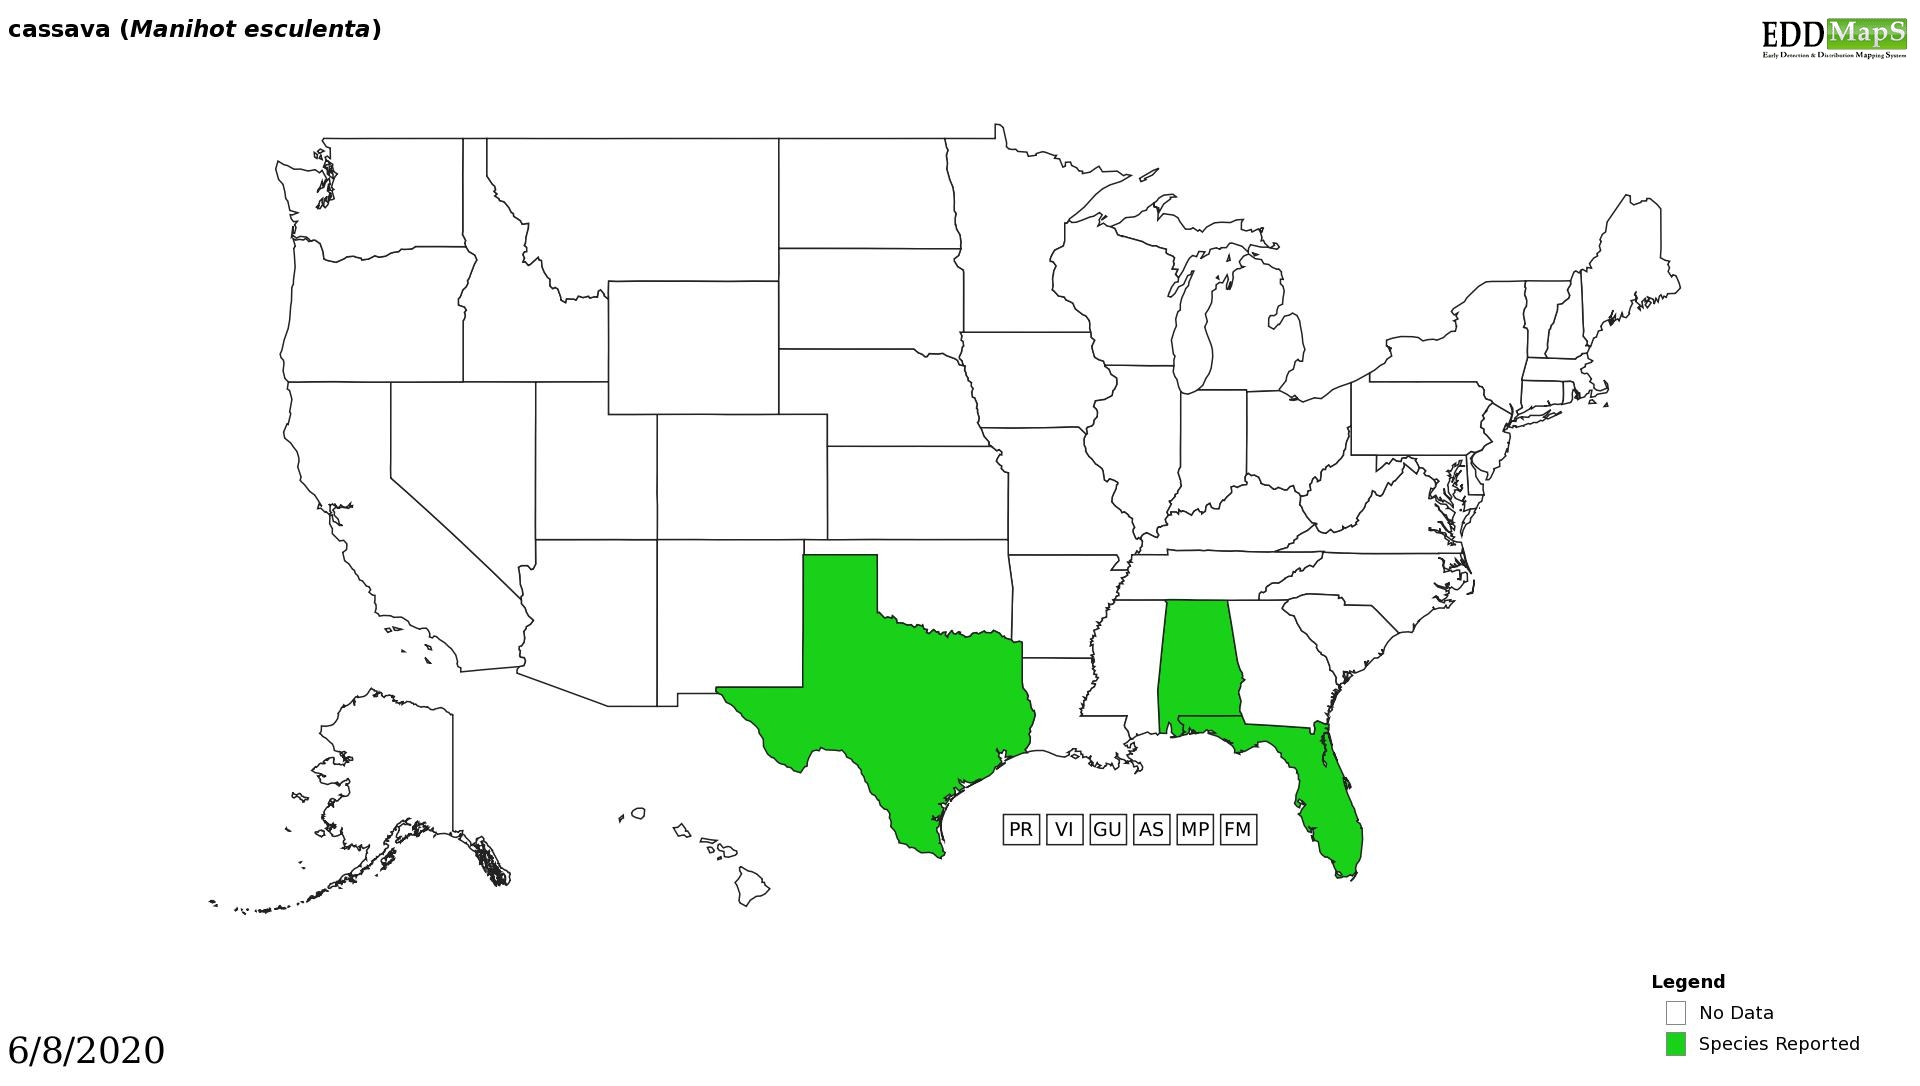 Cassava distribution - United States